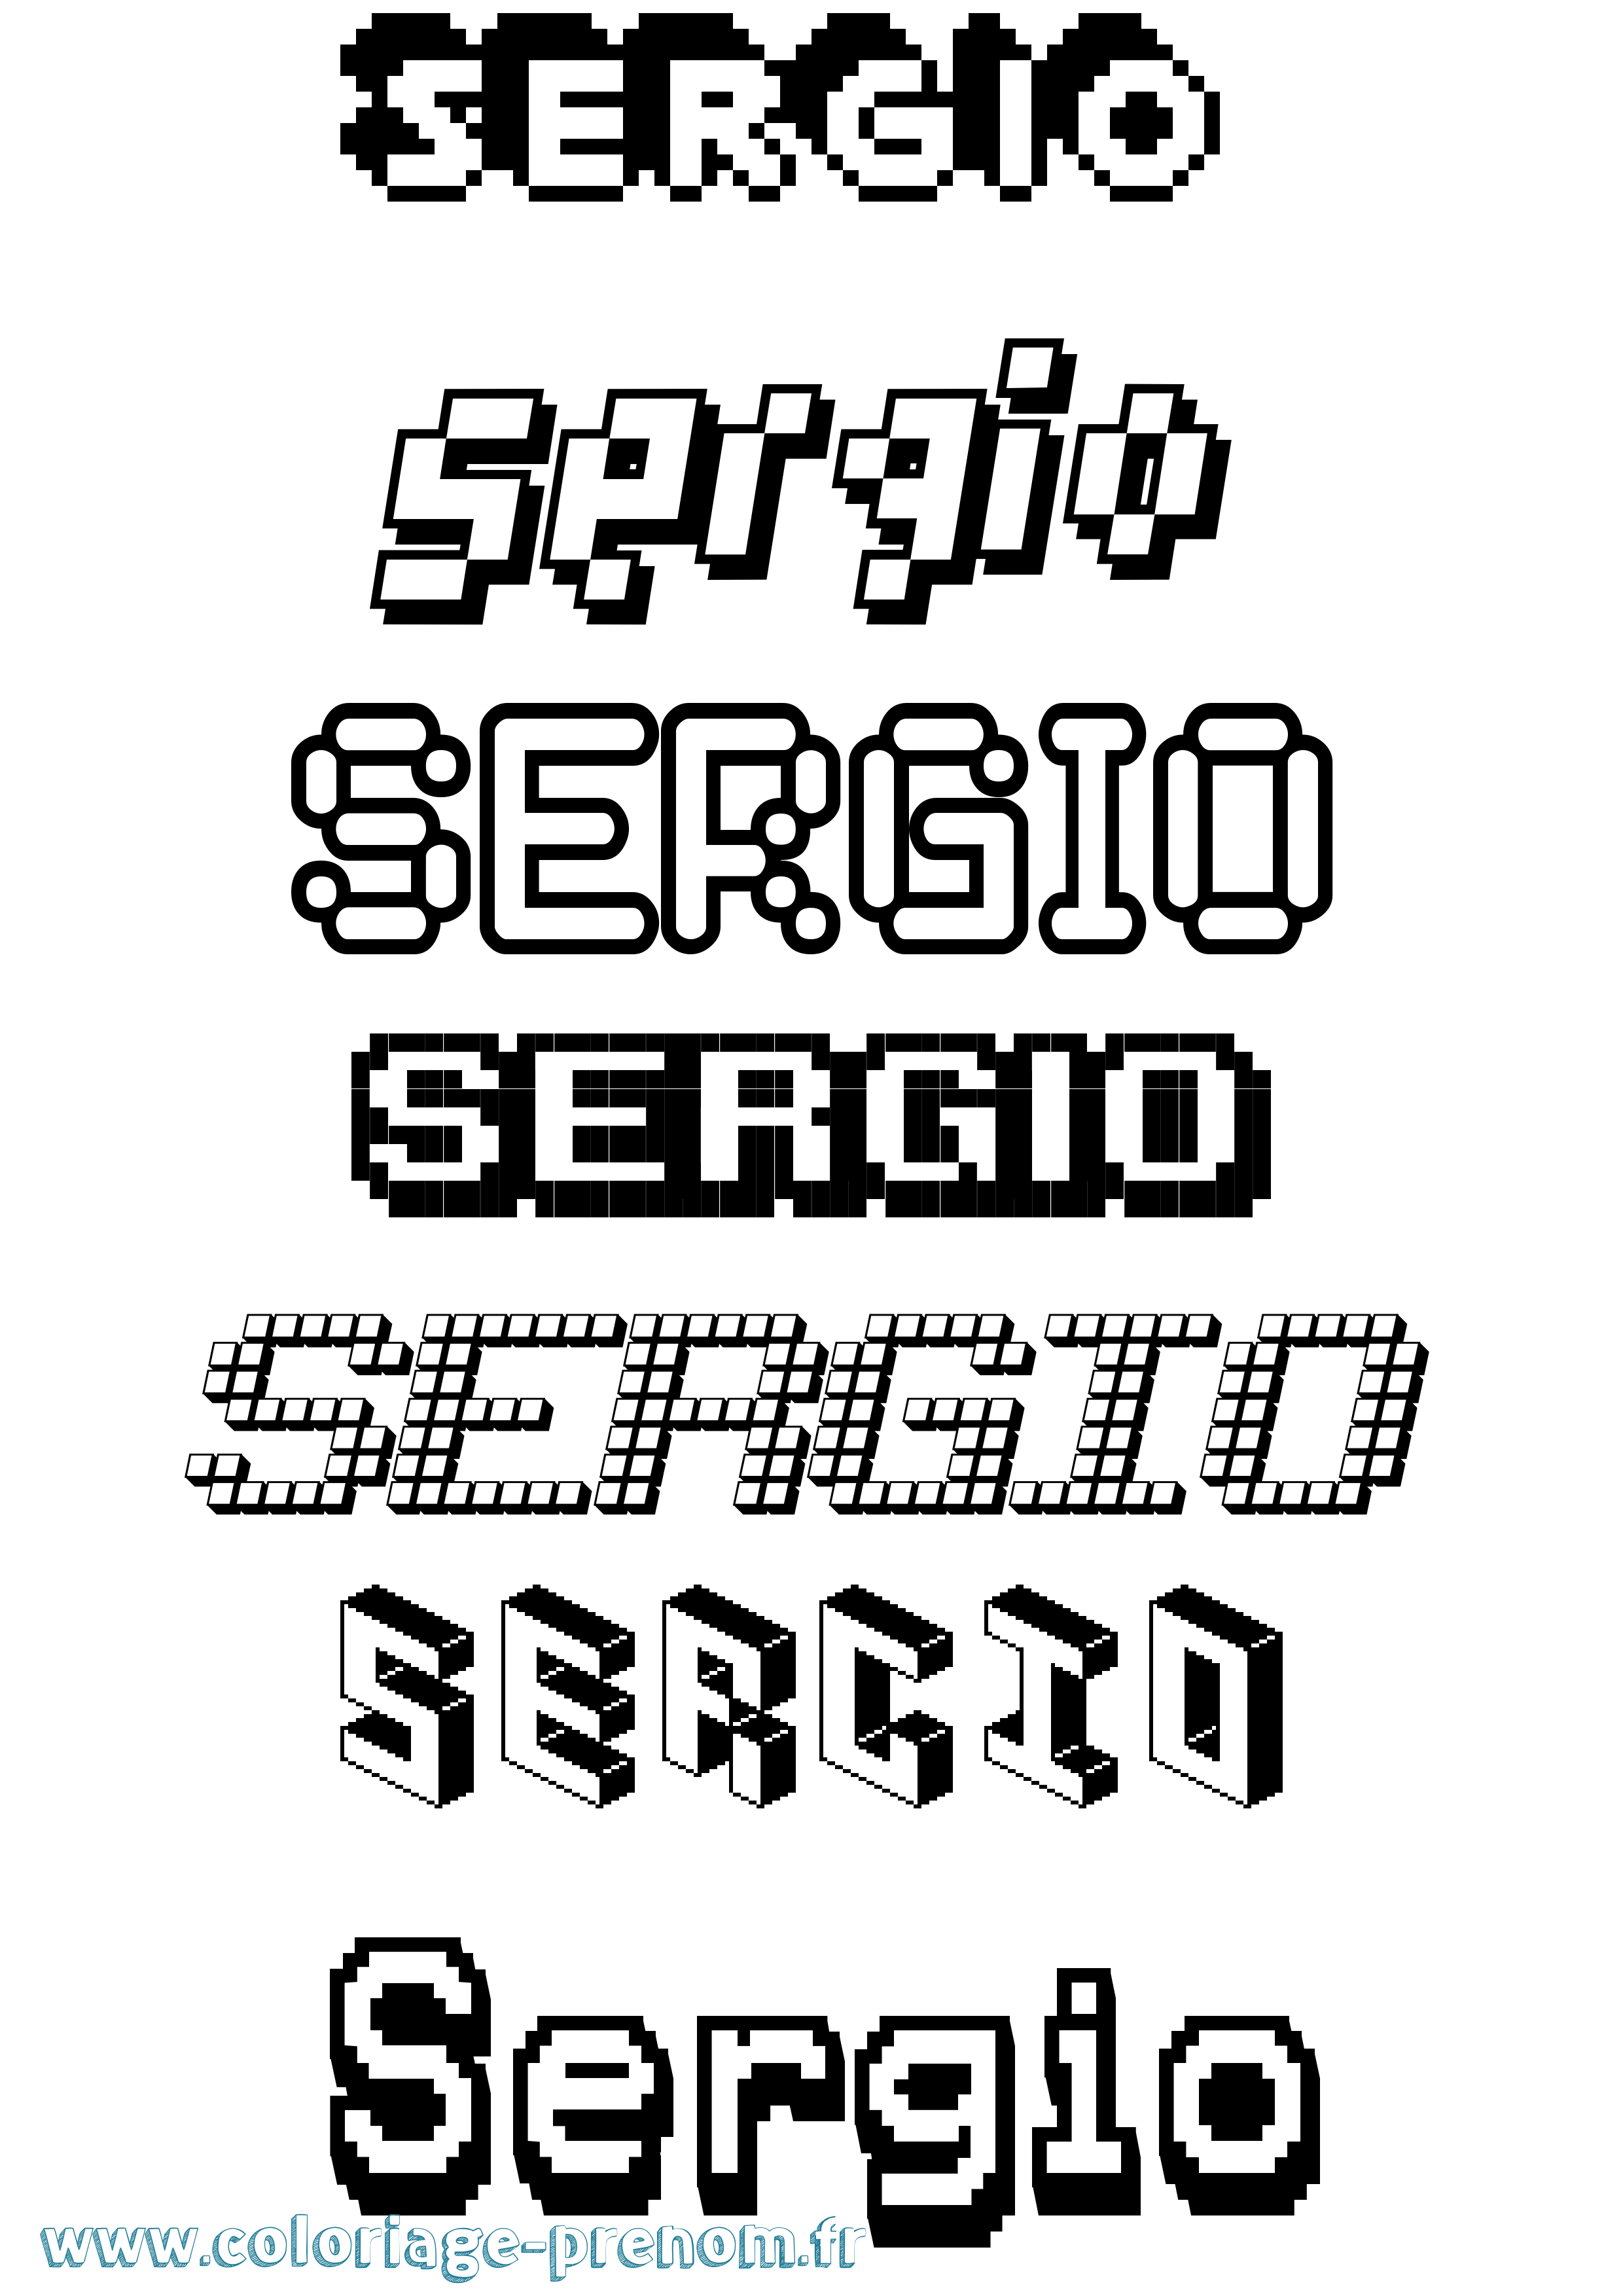 Coloriage prénom Sergio Pixel